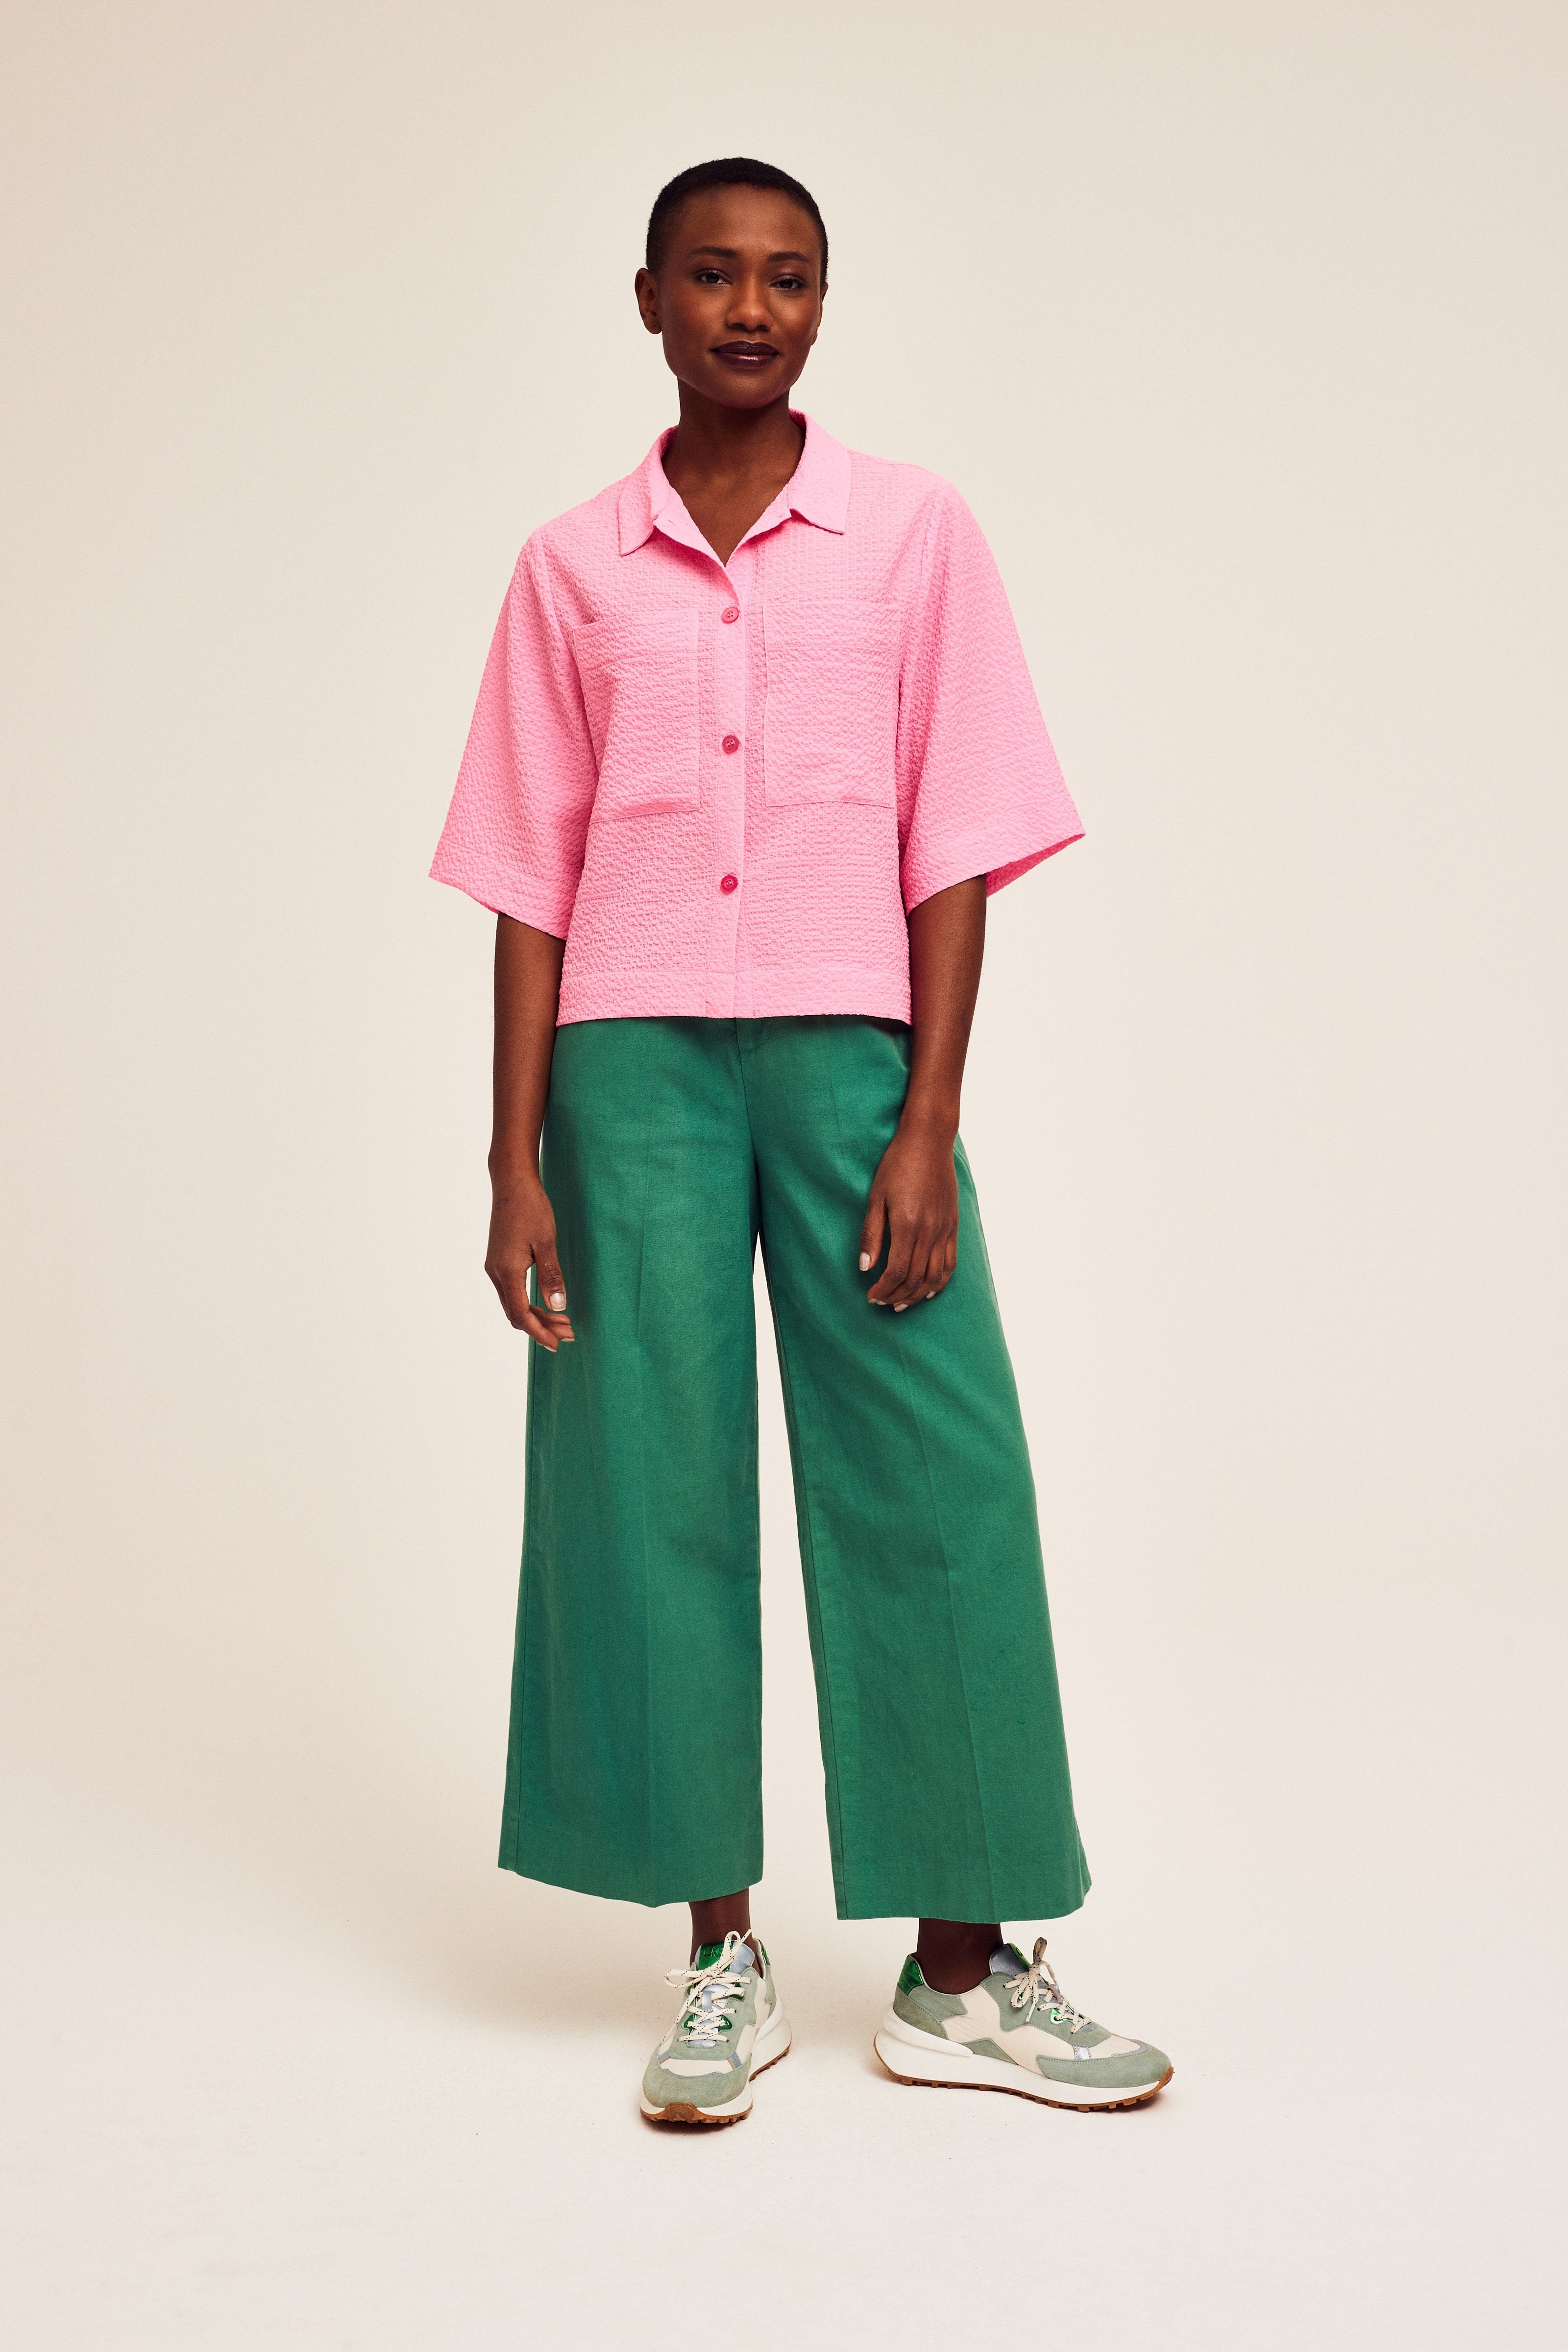 CKS Dames - SELIN - blouse long sleeves - bright pink